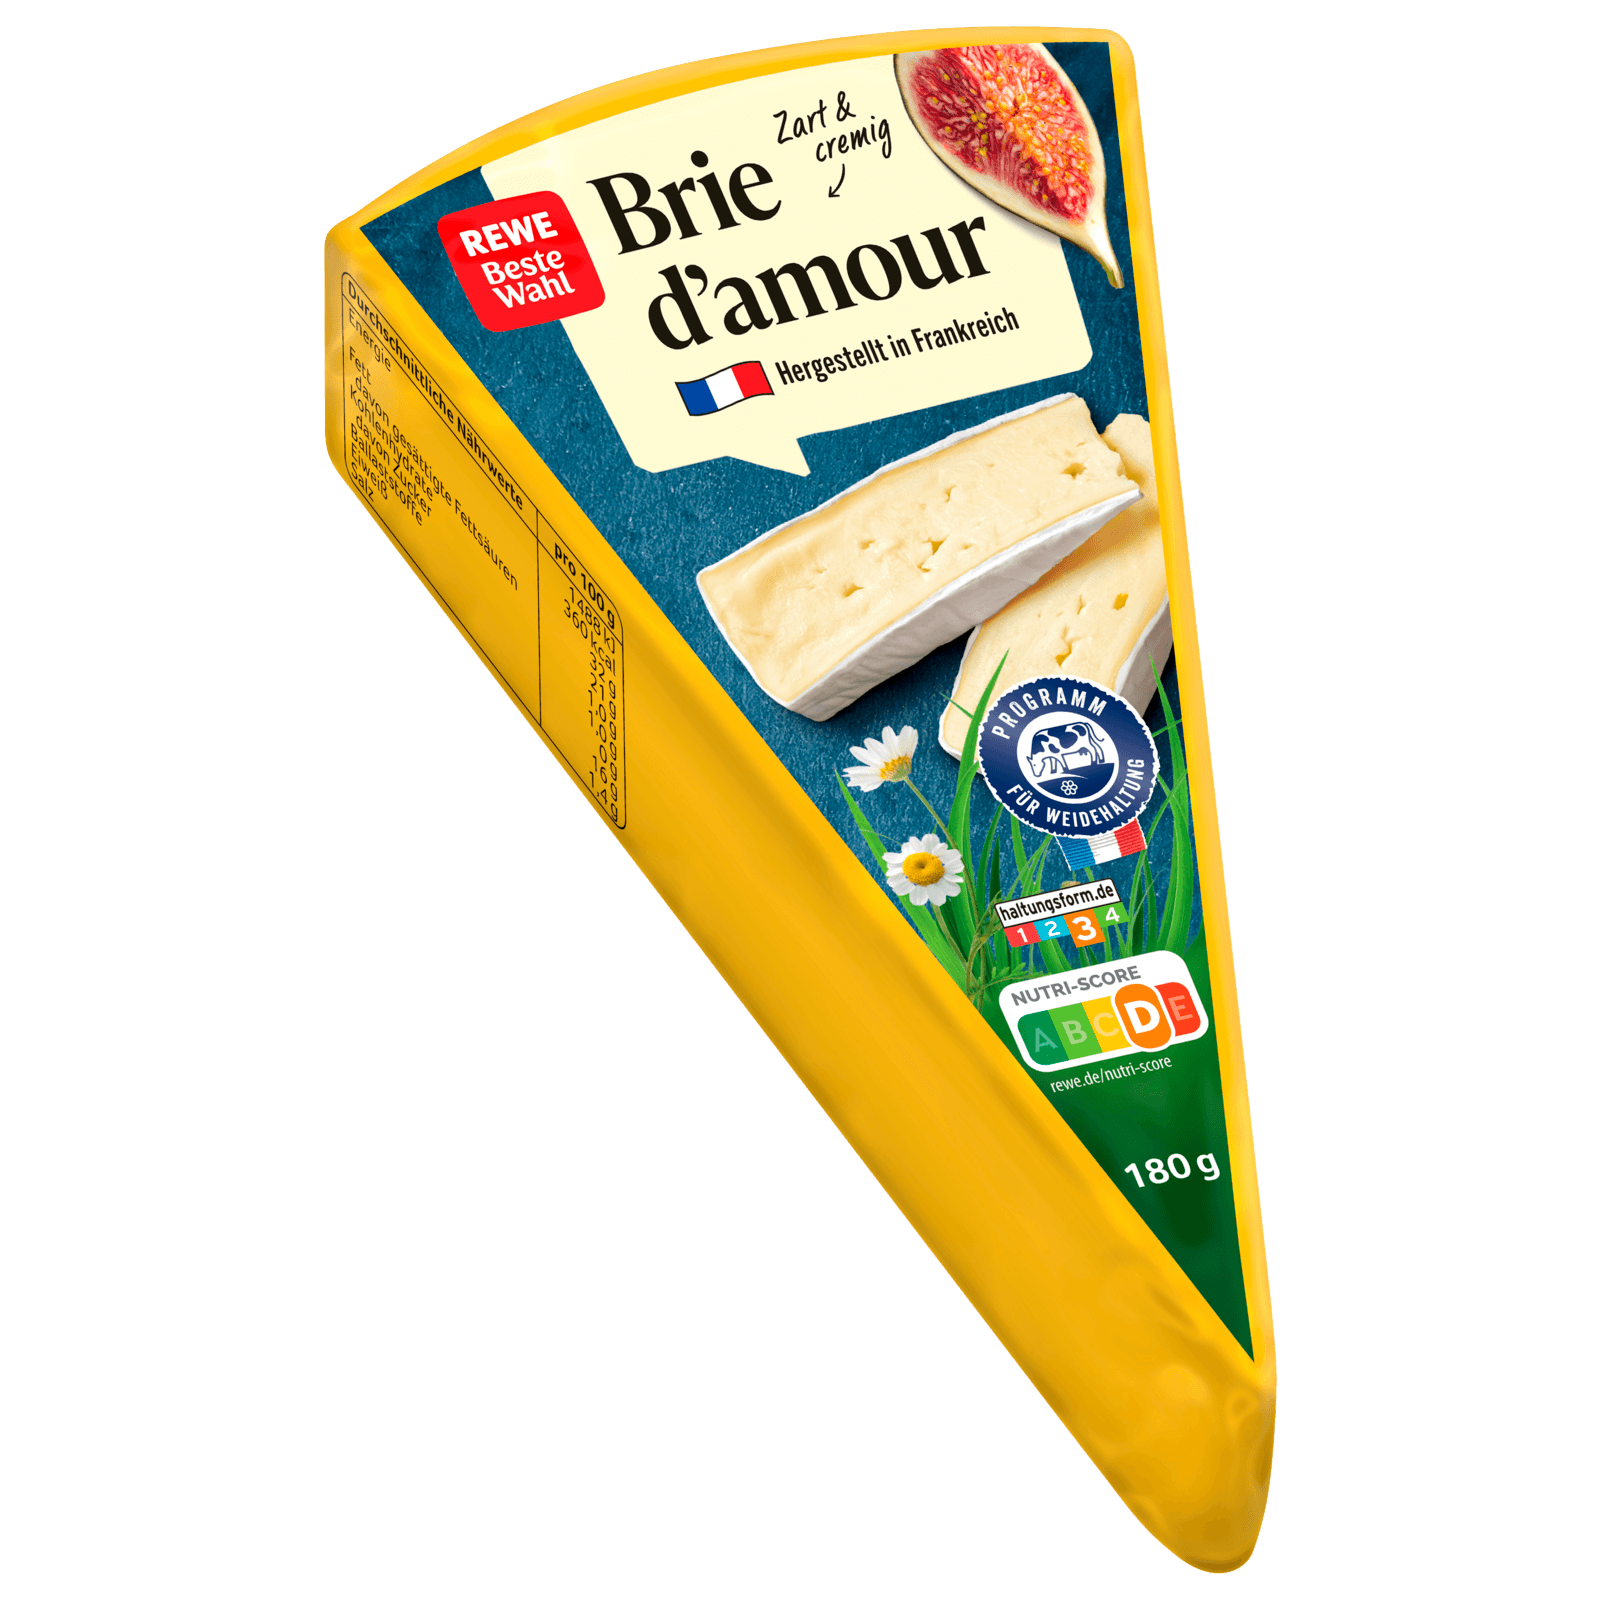 REWE Beste Wahl Brie d'amour 180g